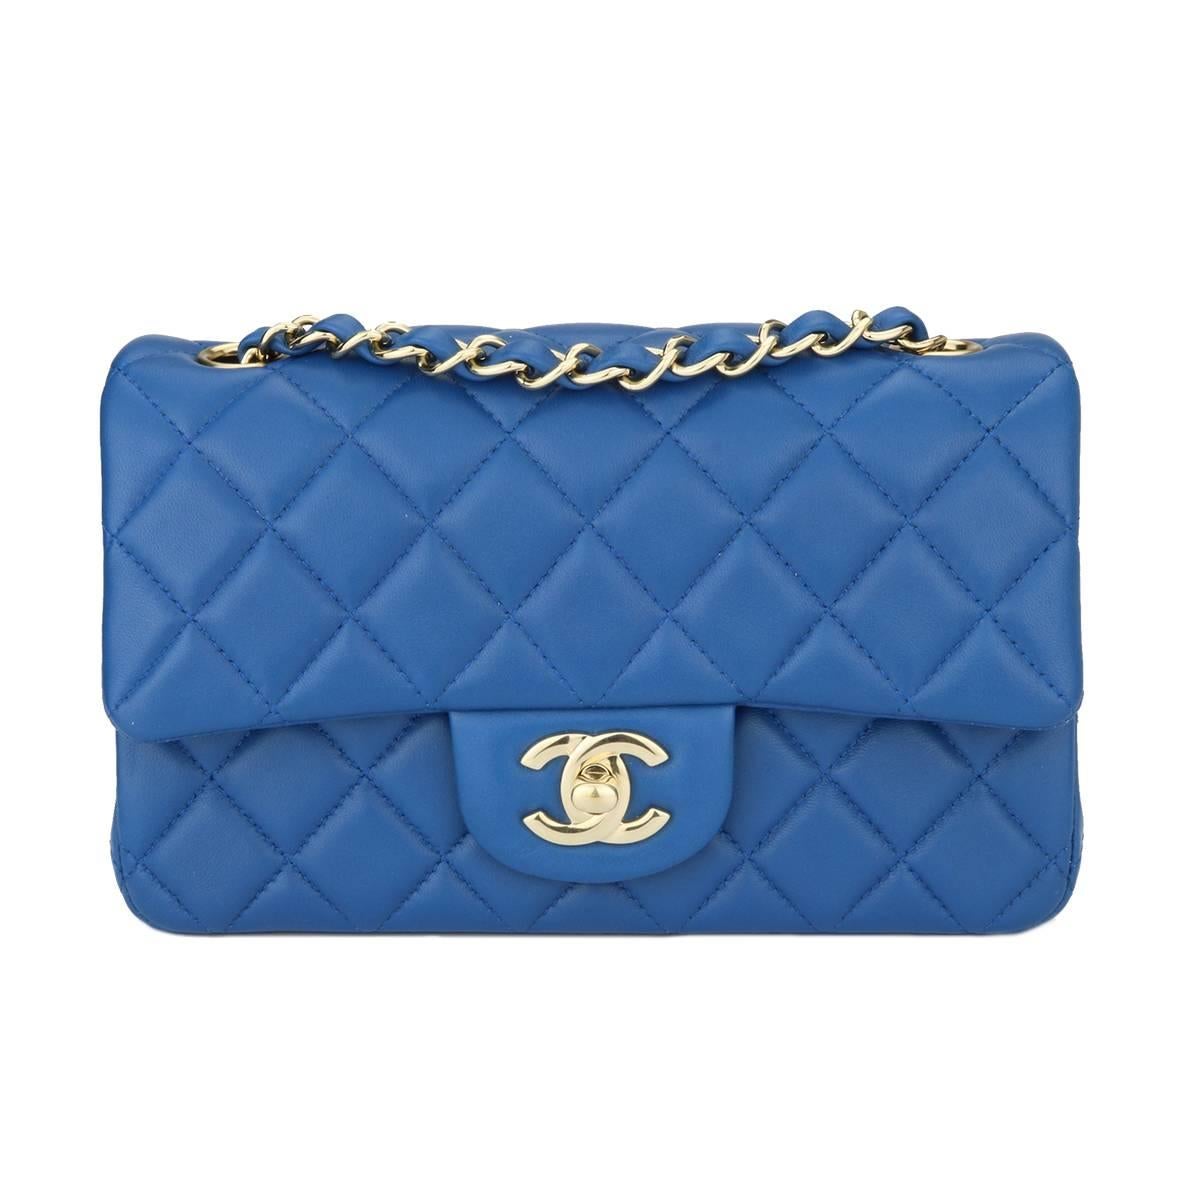 Chanel Rectangular Mini Blue Lambskin Bag with Light Gold Hardware, 2017